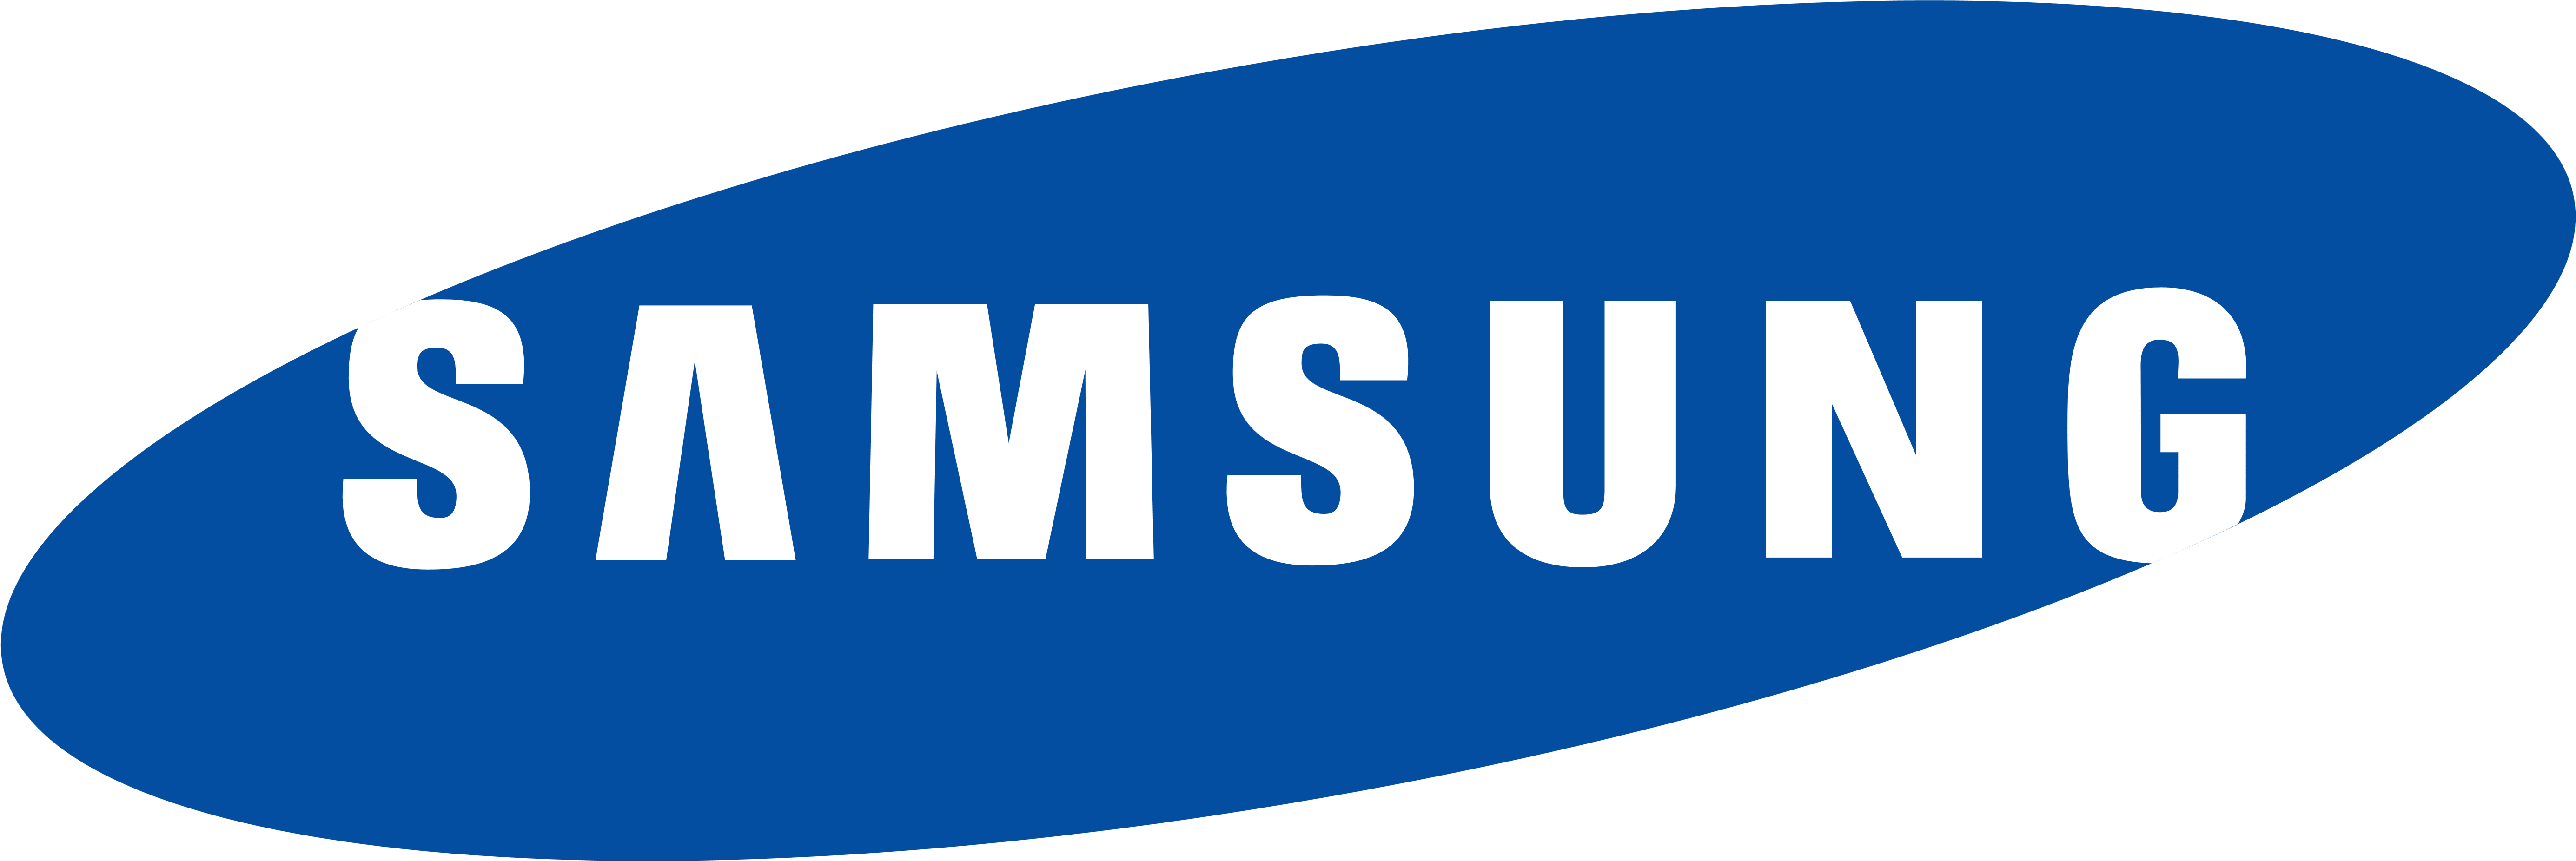 Logo Samsung Png - Samsung Logo 2016 Png (5584x1880)